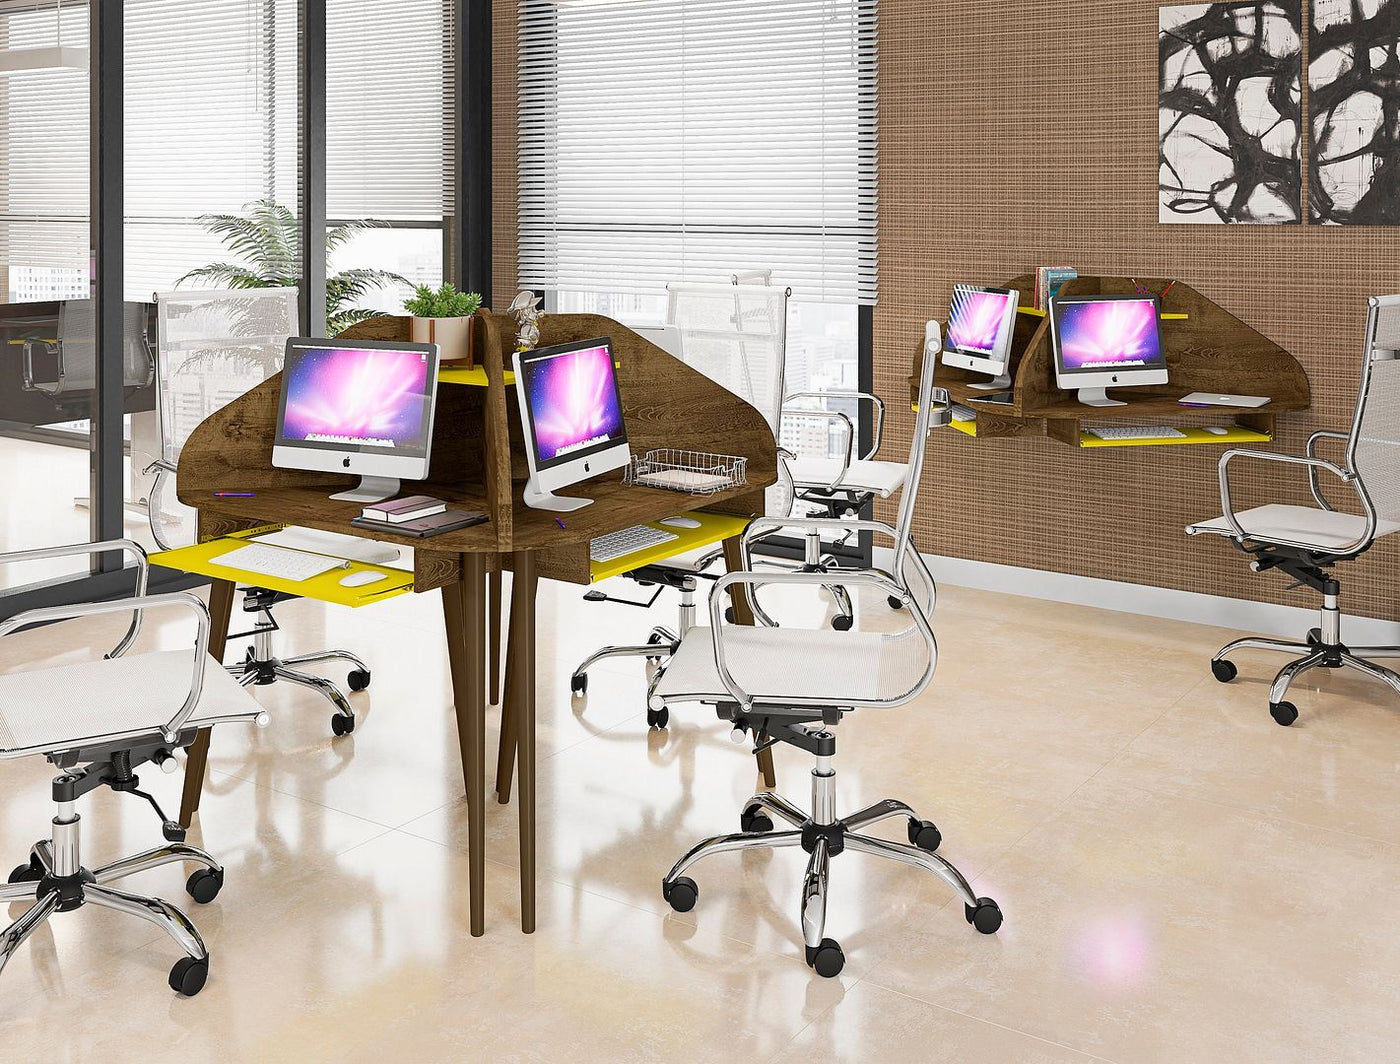 Gatutca Cubicle Section Desk with Keyboard Shelf Set of 4 - Rustic Brown/Yellow